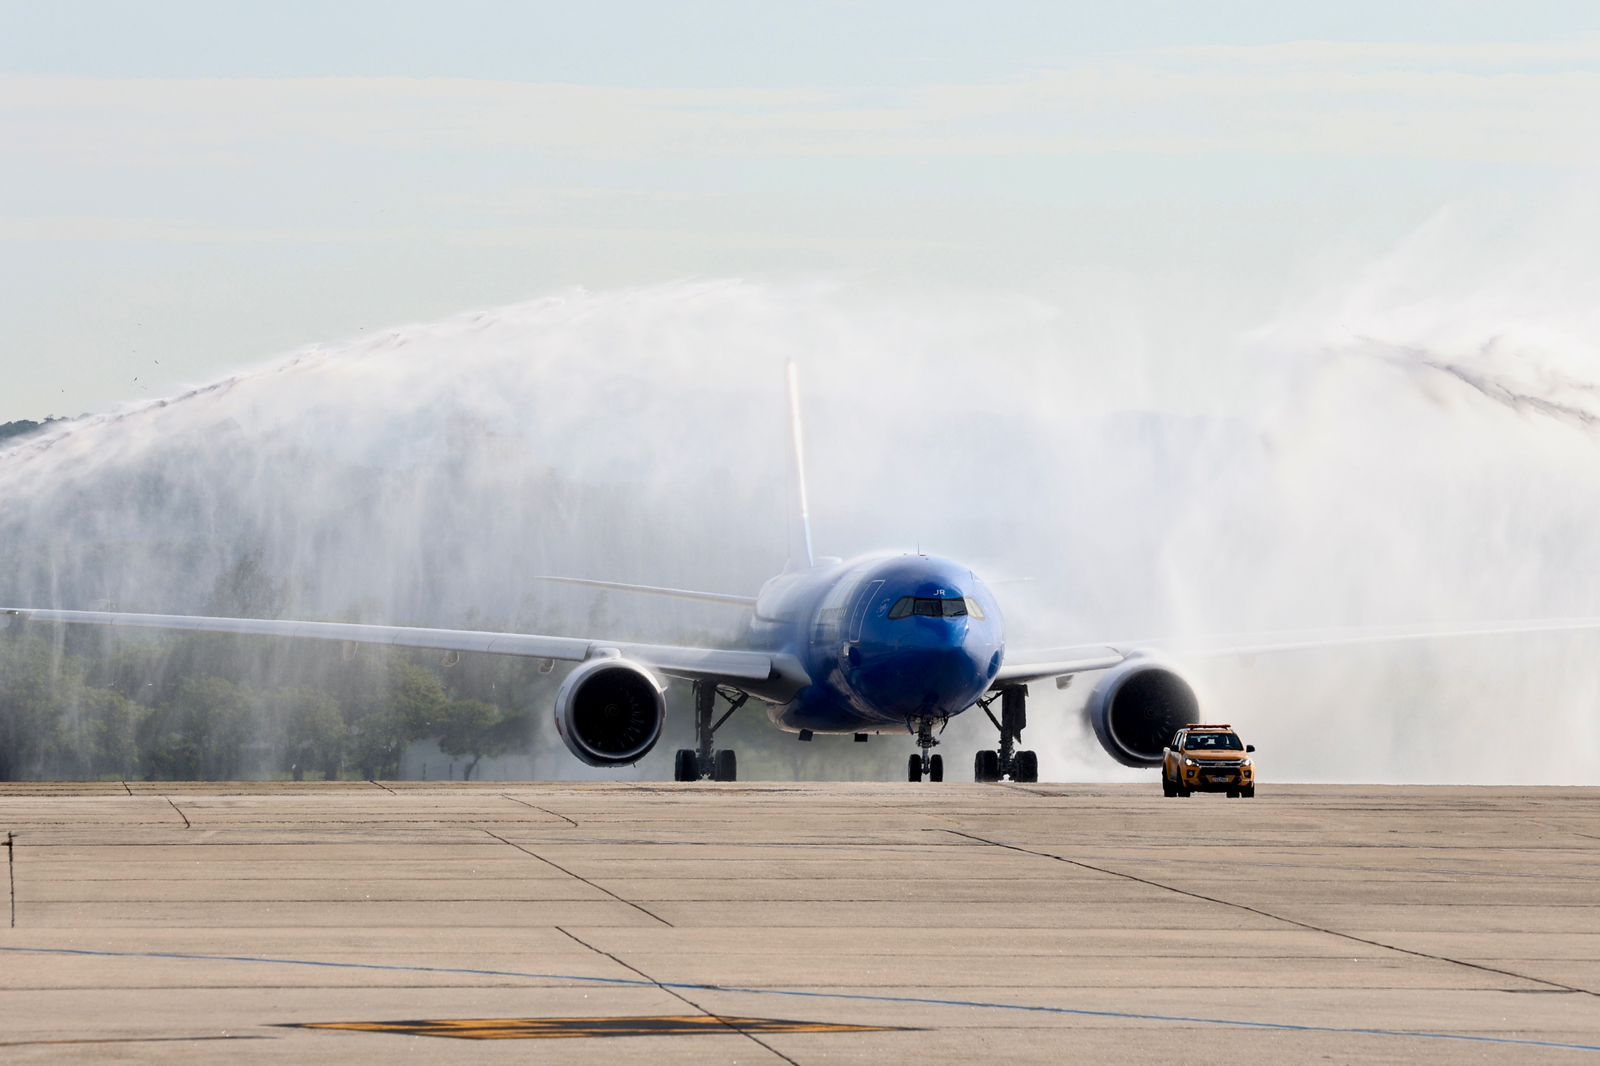 An ITA Airways A330neo receiving a water salute in Rio de Janeiro